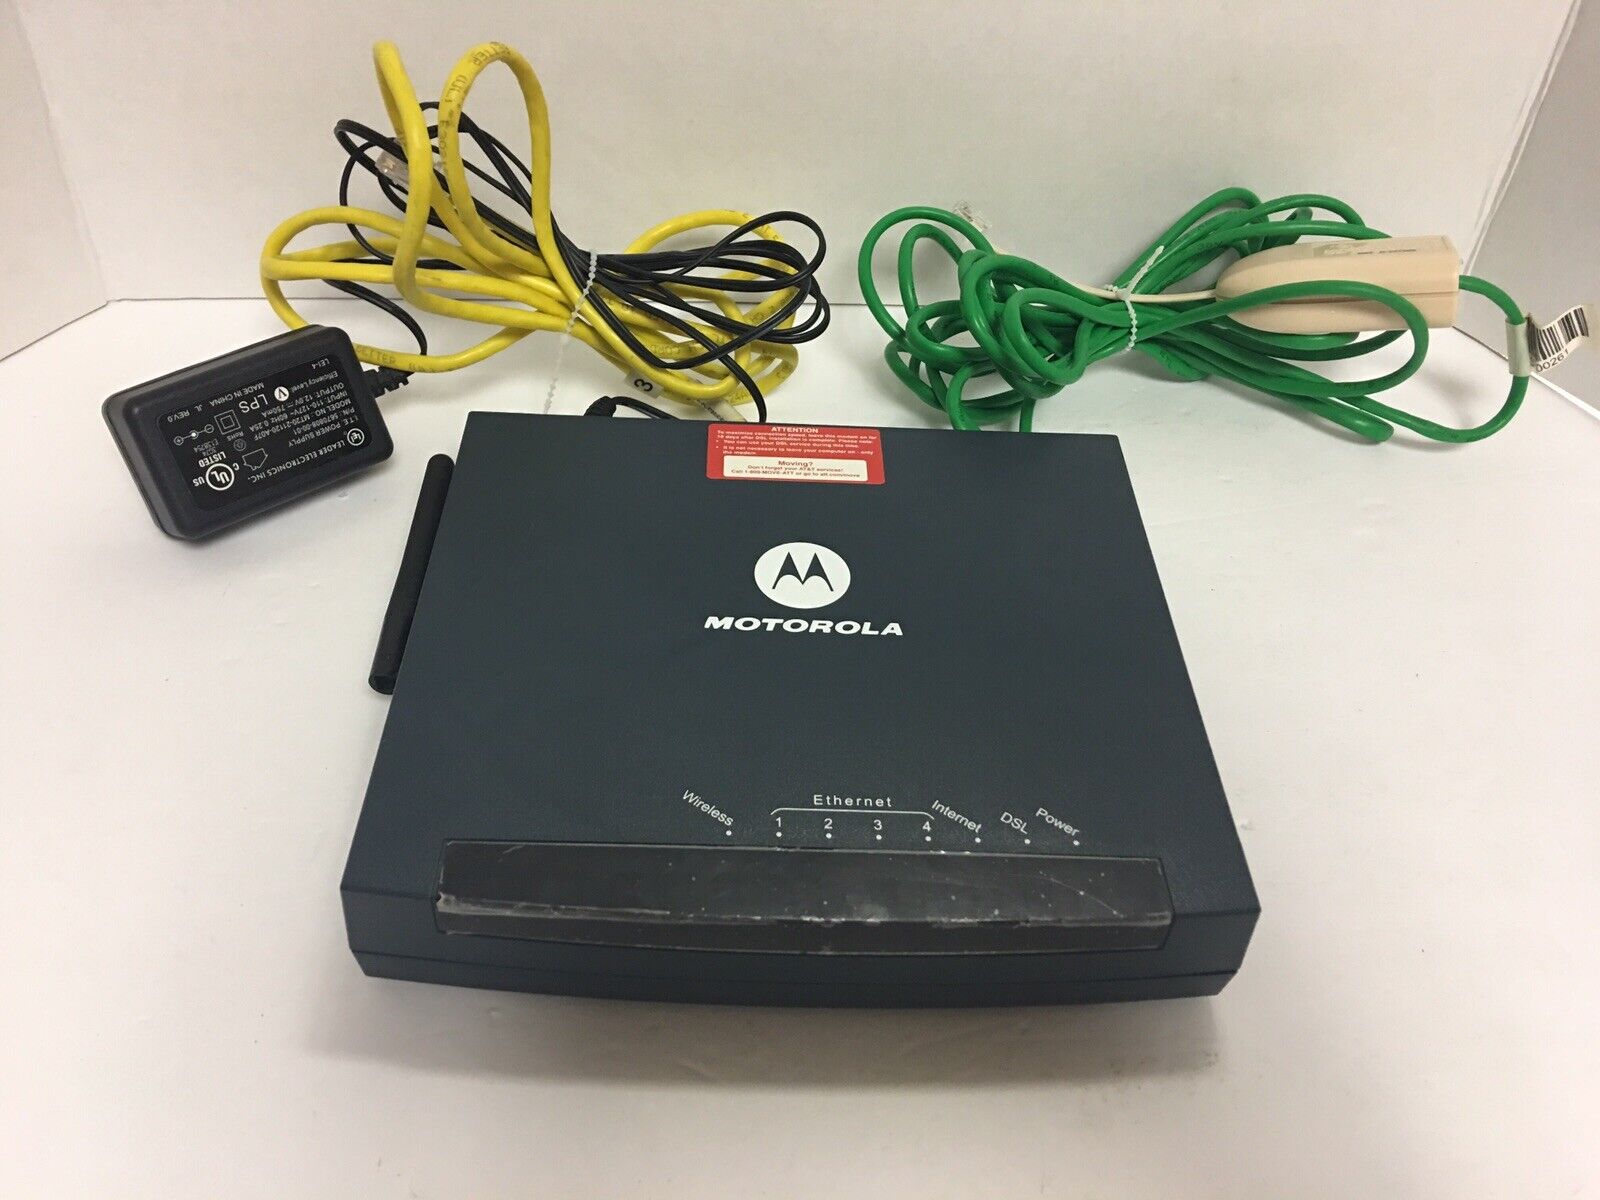 Motorola 3347-02-1022 4-Port Wireless Router used